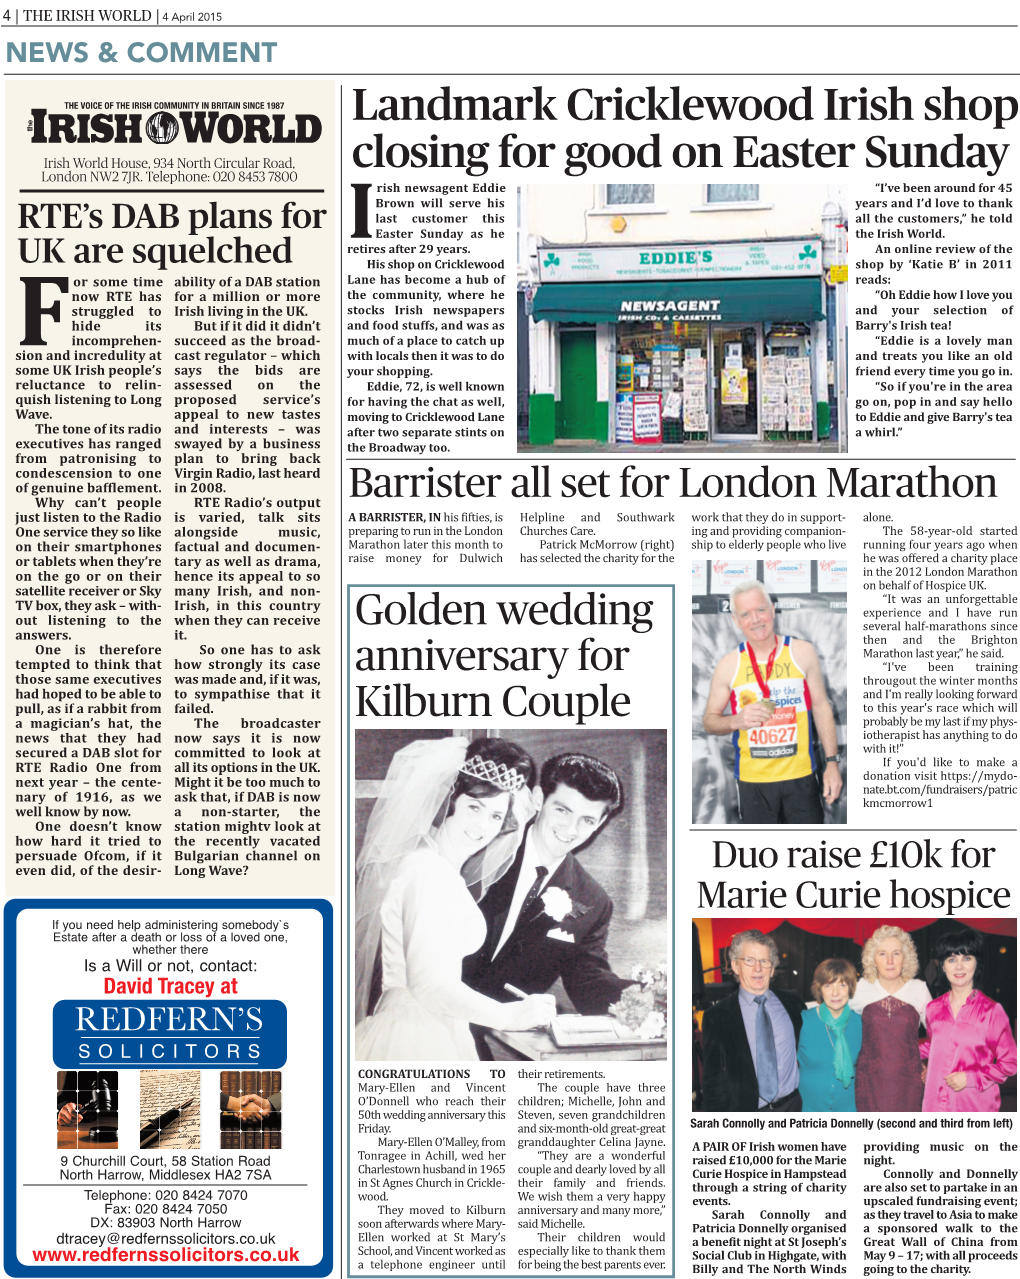 Landmark Cricklewood Irish Shop Closing for Good on Easter Sunday